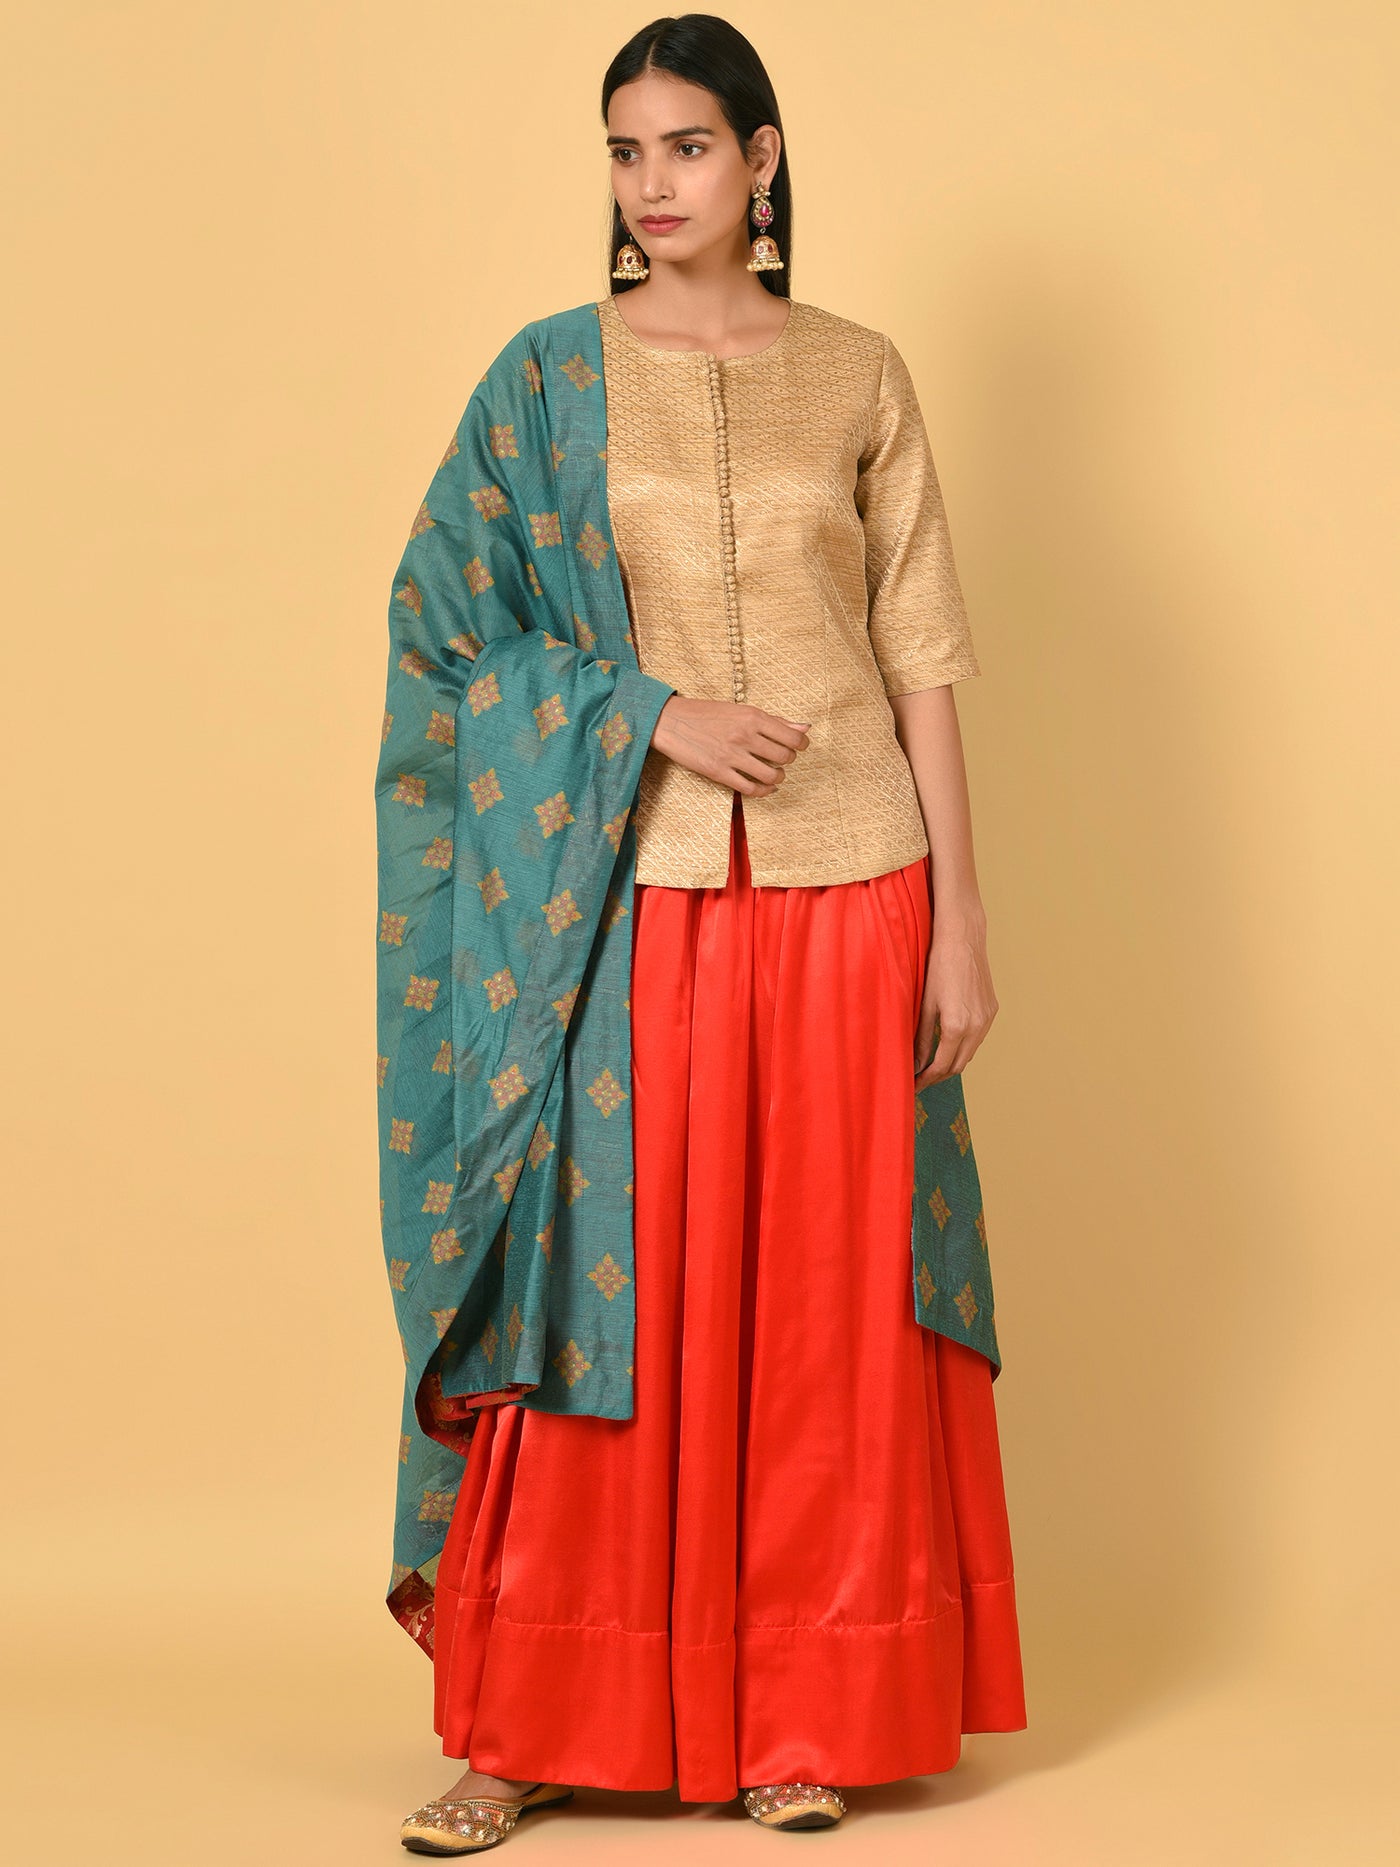 Buy madhuram textiles Women's Foile Printed Slab Rayon Kurti with Skirt Set(M-2216_Green_Medium)  at Amazon.in